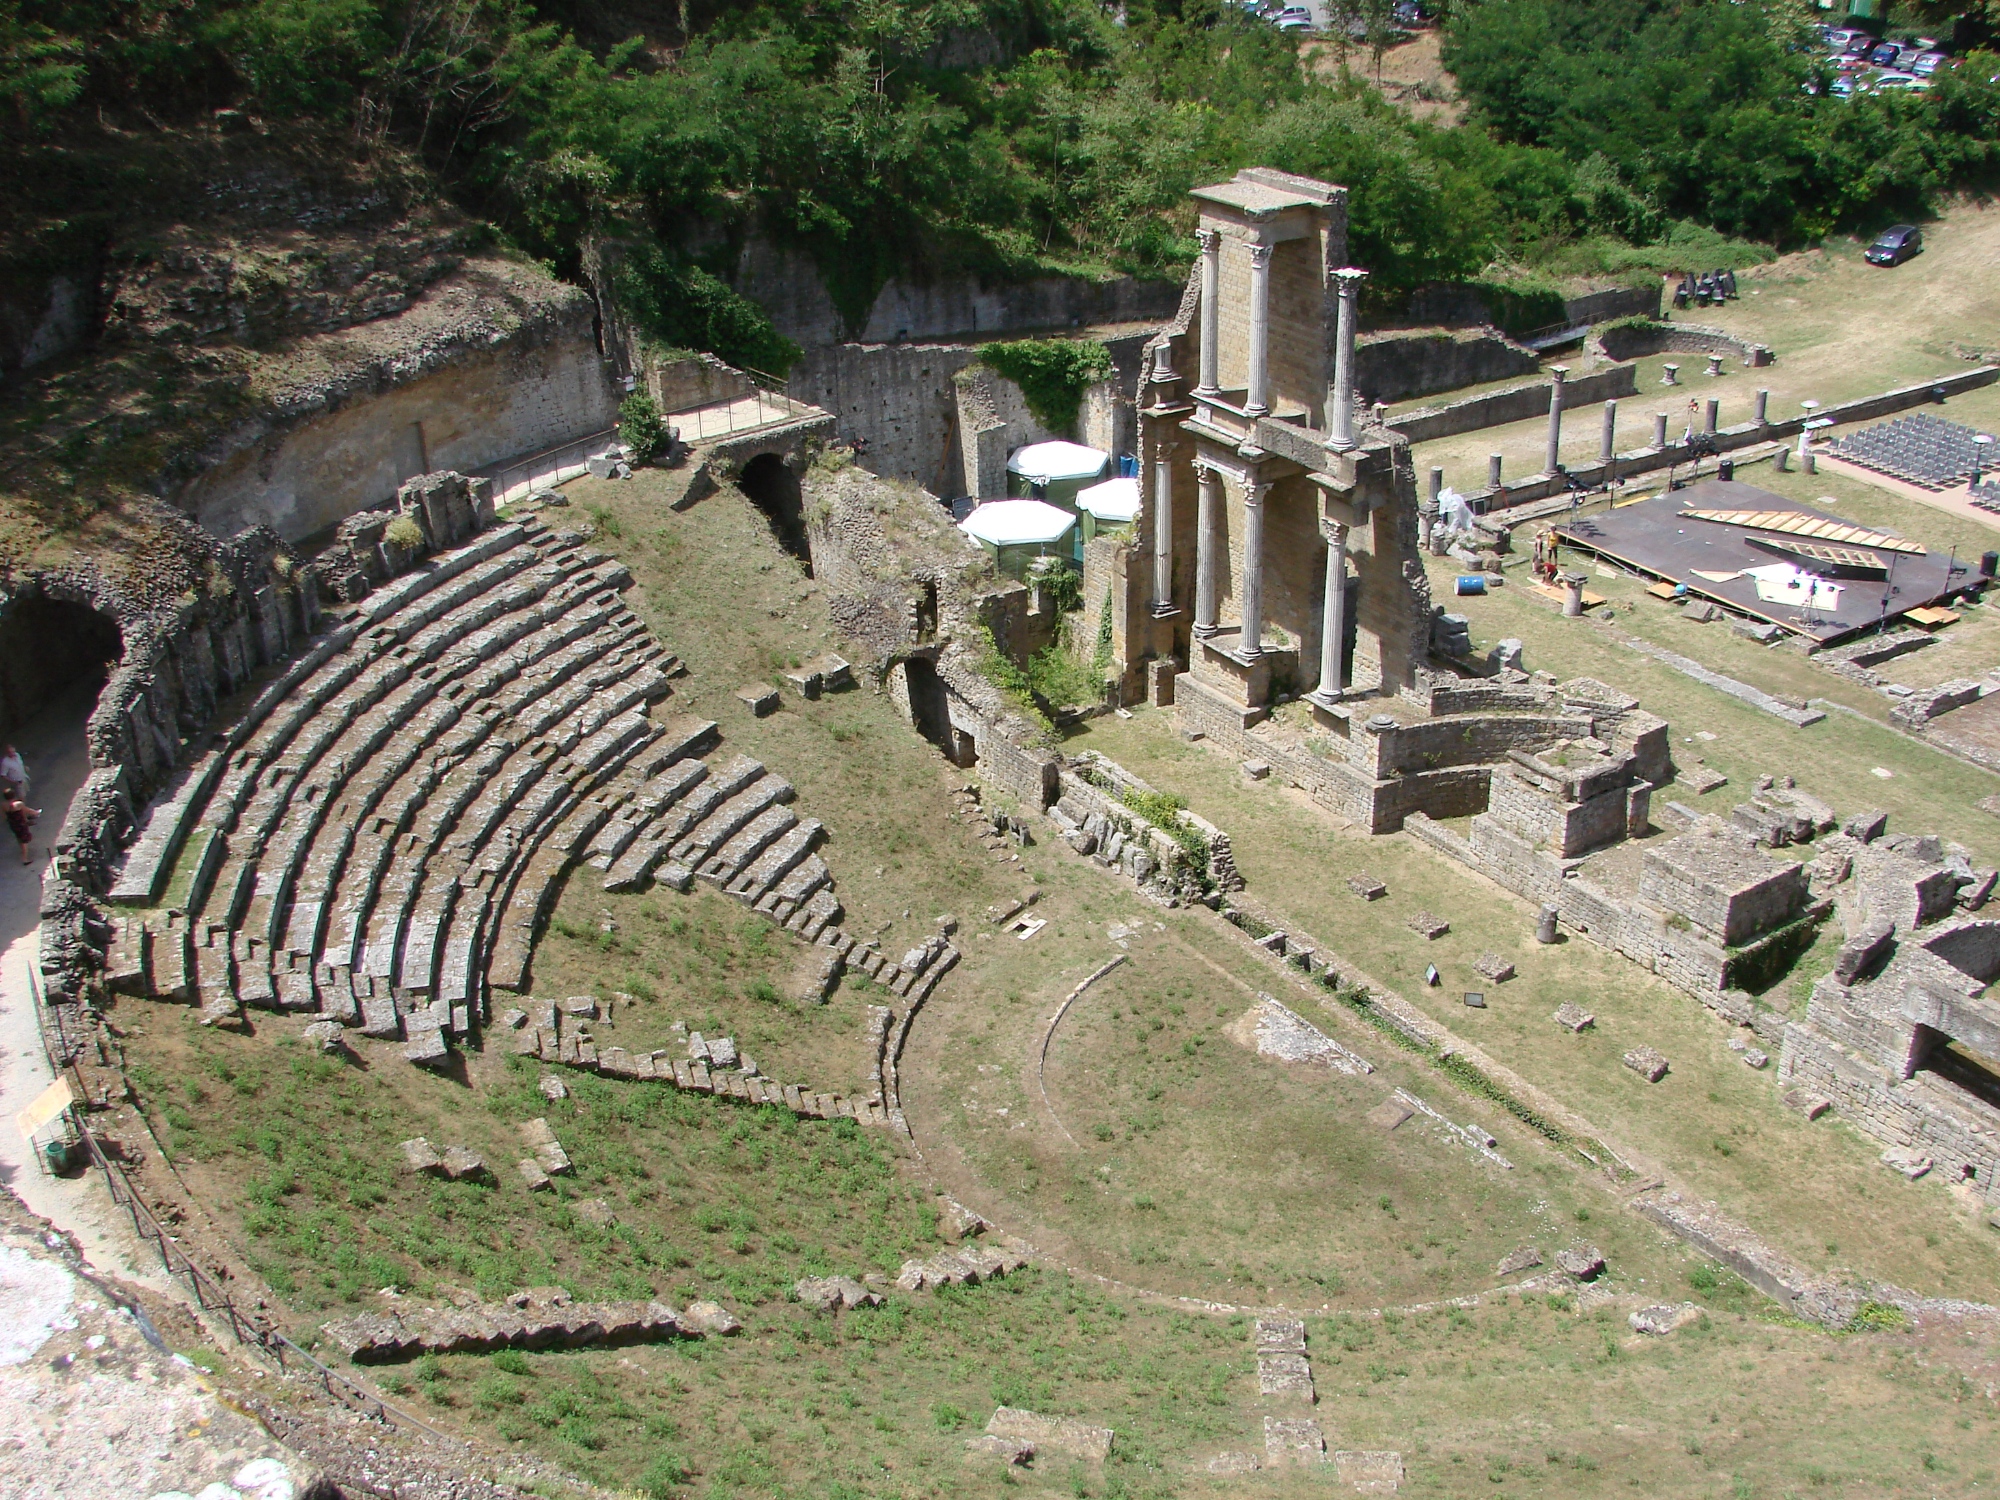 Anfiteatroen  Volterra